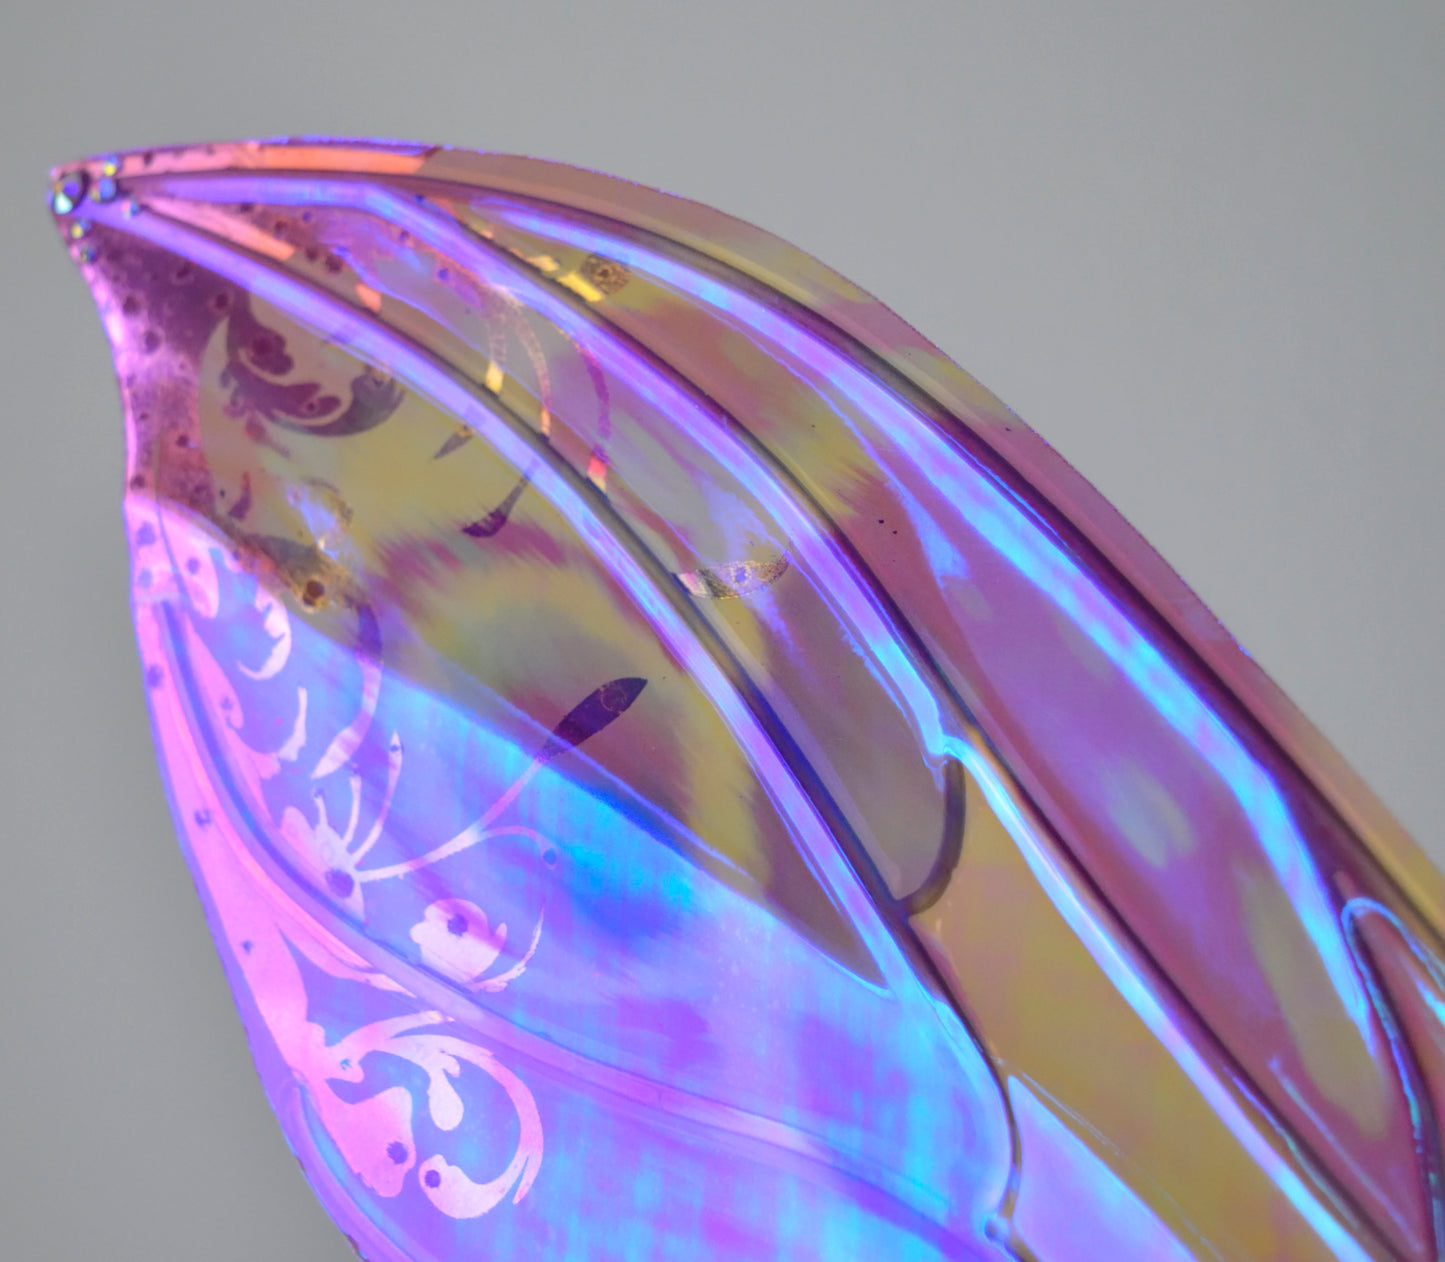 Elvina "Sugarplum" Gilded Iridescent Convertible Fairy Wings with Swarovski Crystals